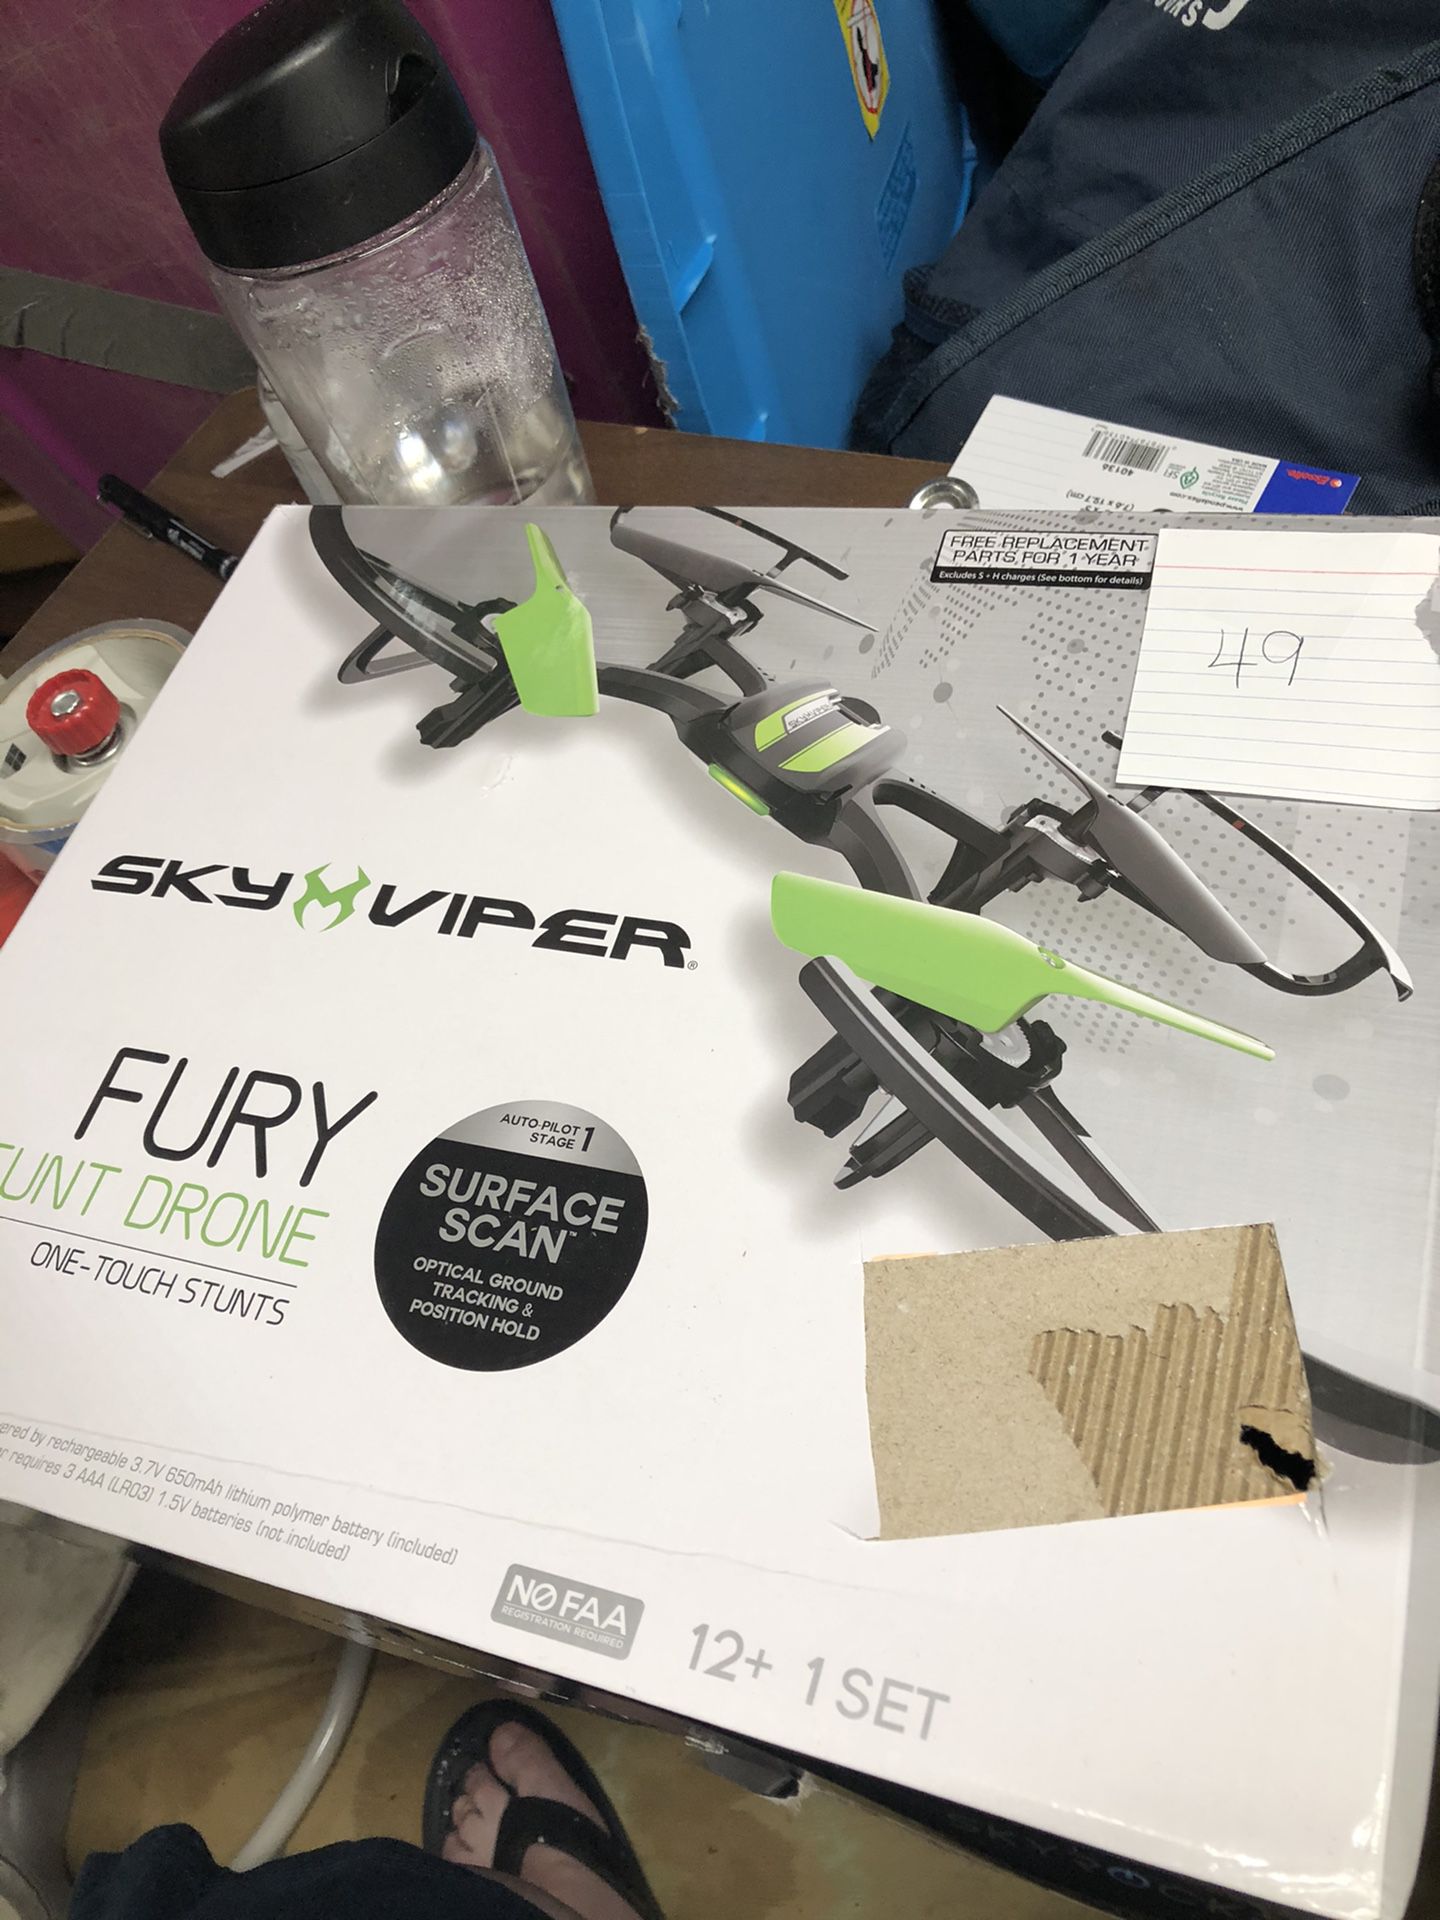 Stunt fury drone